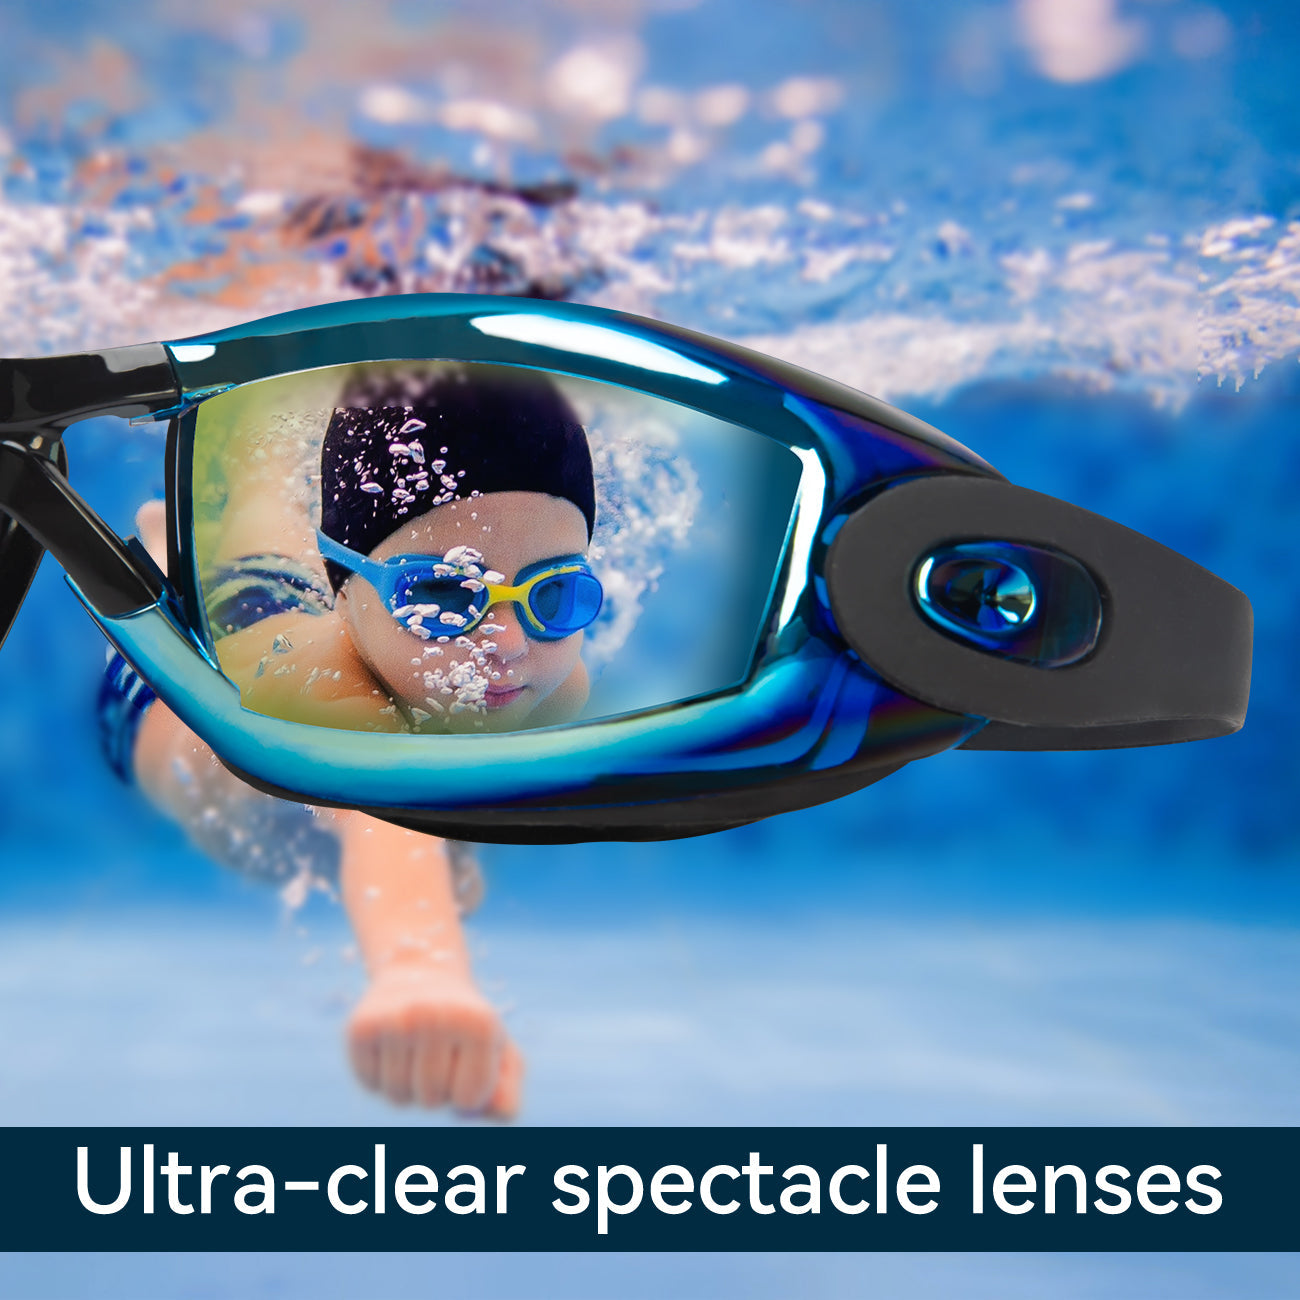 Swim Adults Swimming Race Goggles Anti Fog Spray UV Buy Online